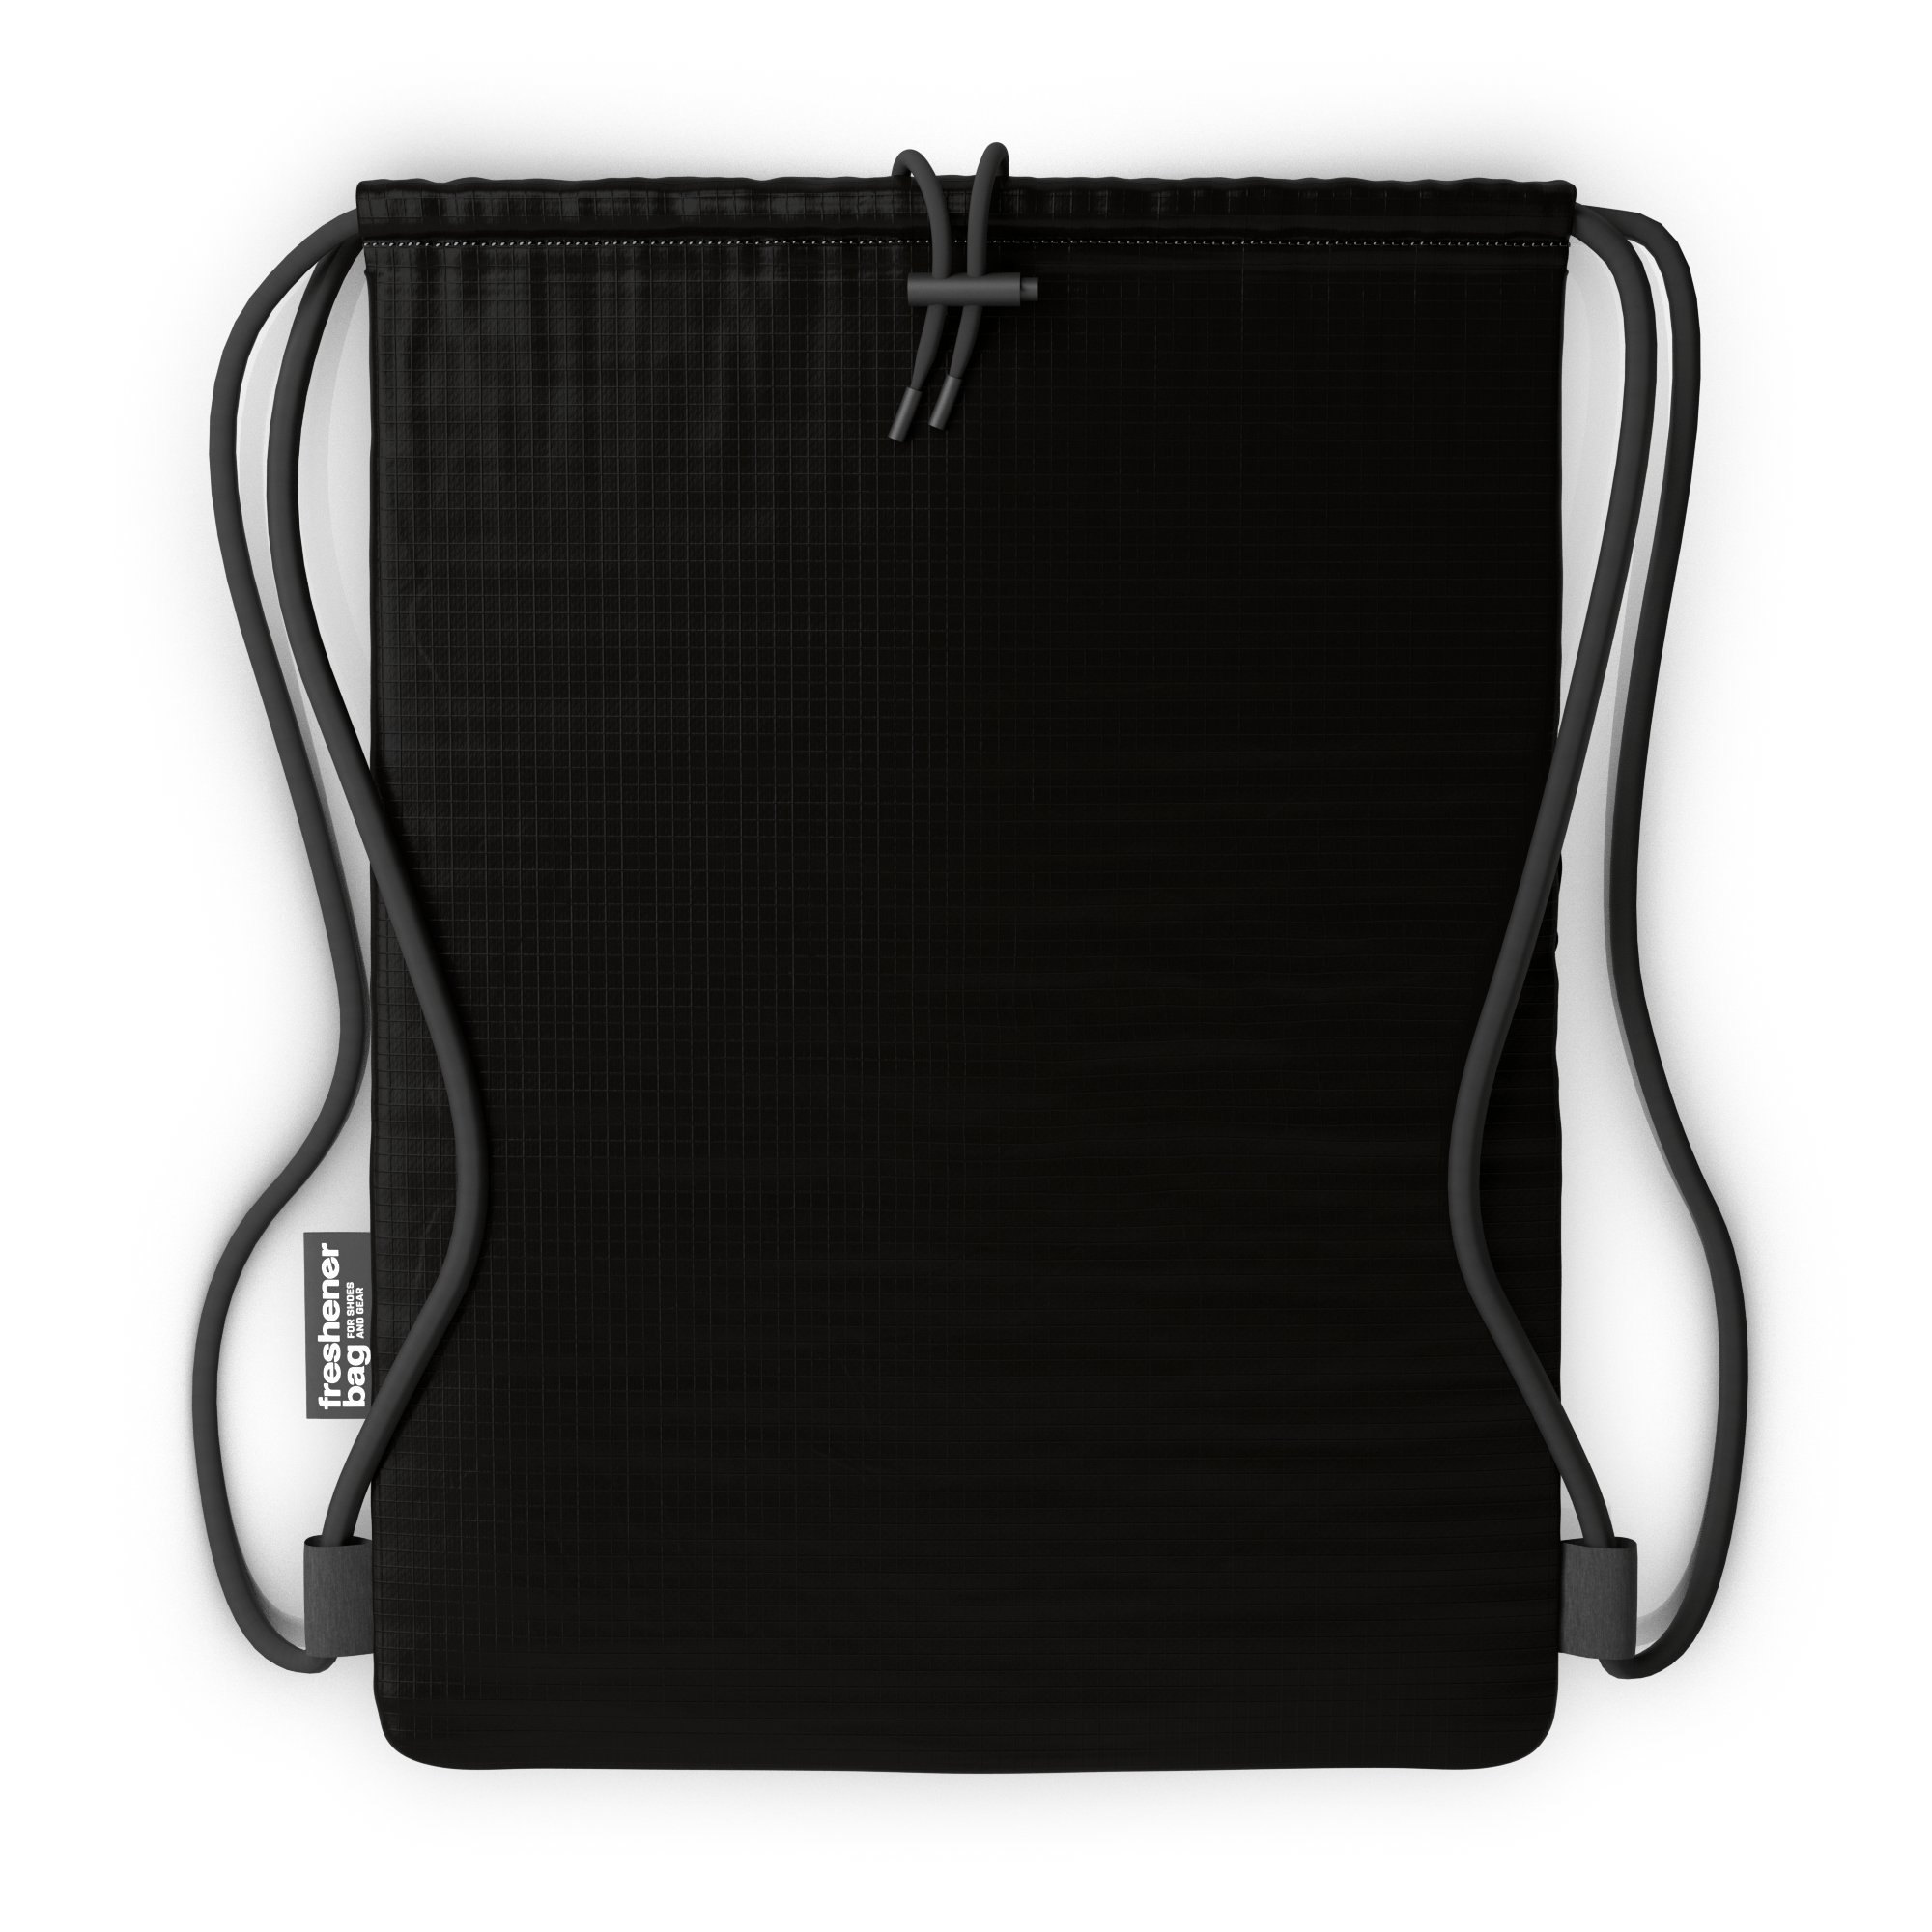 Freshener Bag XL - Black